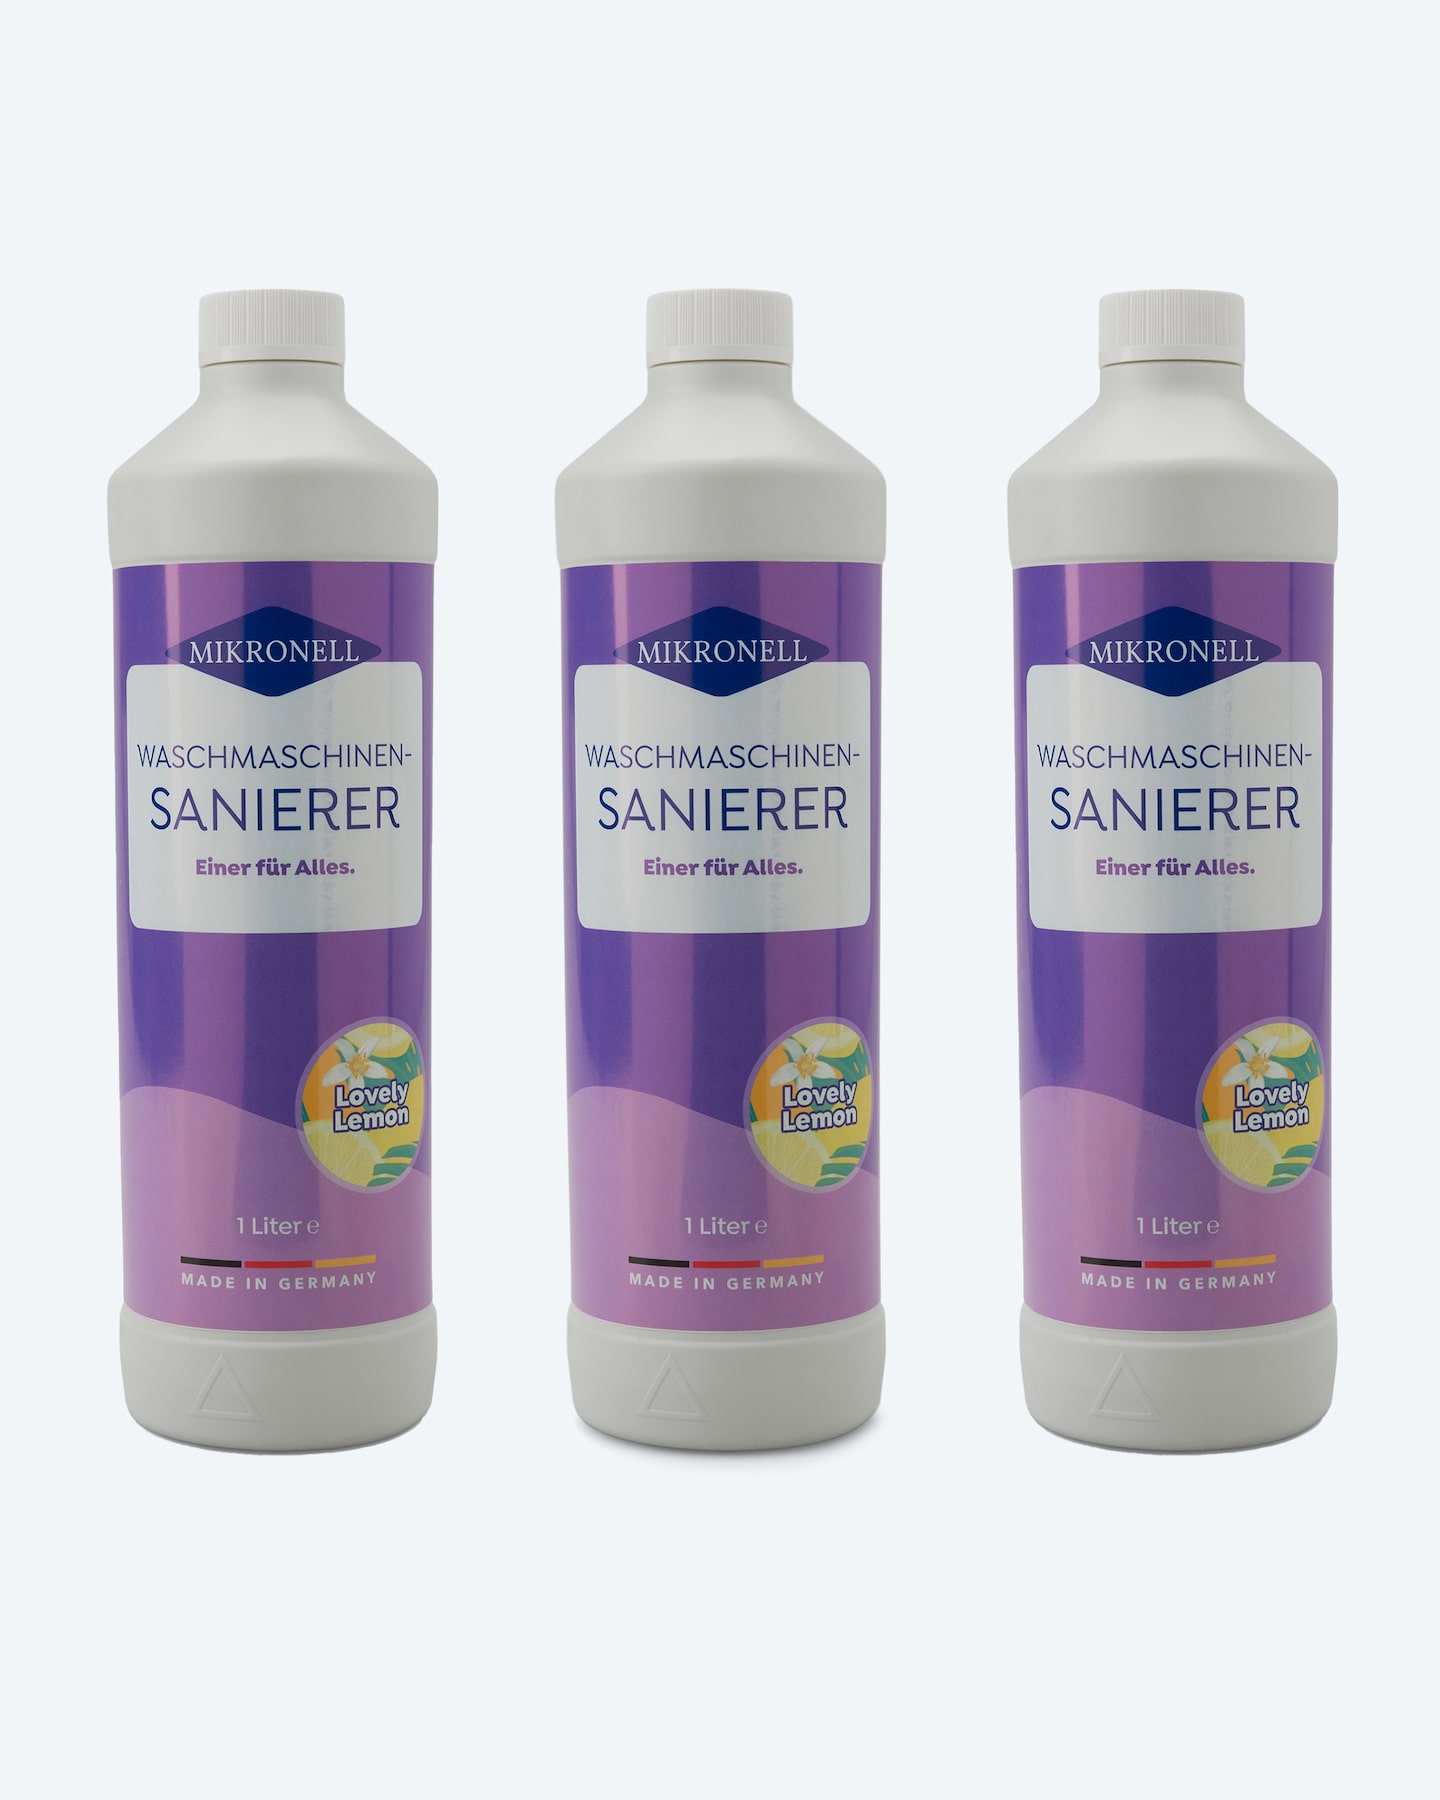 Produktabbildung für Waschmaschinen-Sanierer "Lemon", 3x 1 Liter